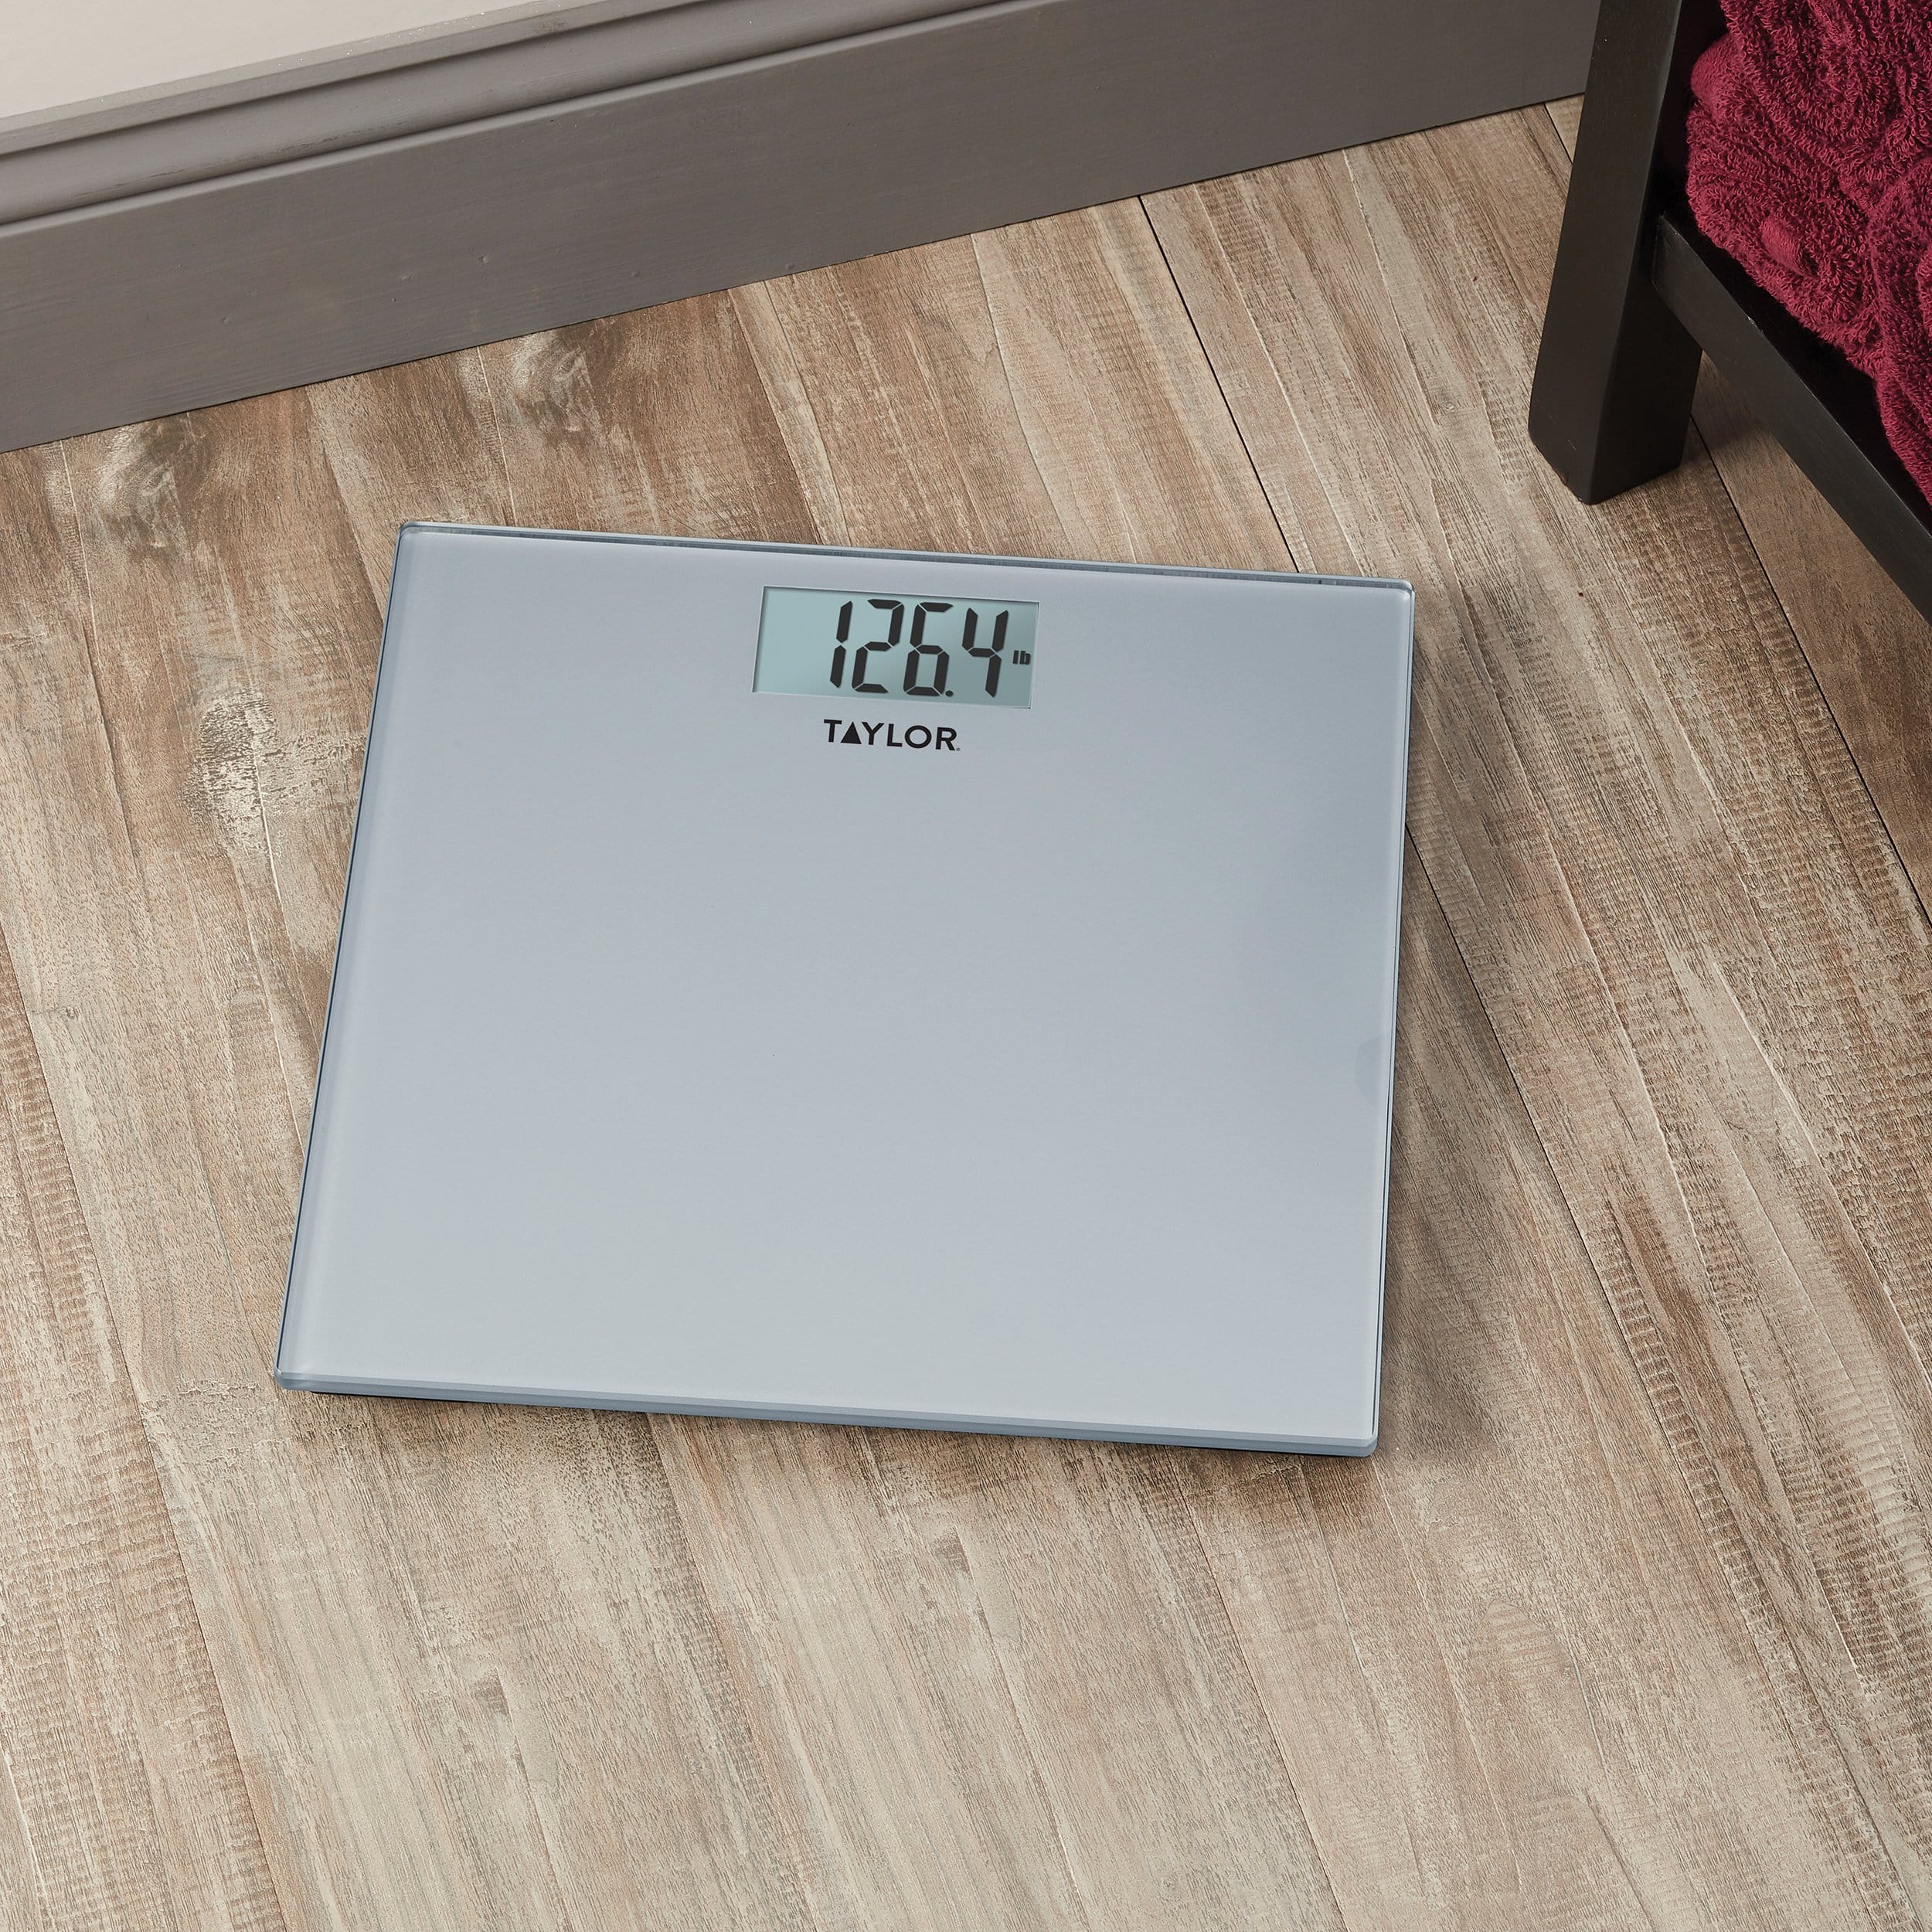 The My Weigh Elite Digital Bathroom Scale With Silver Platform